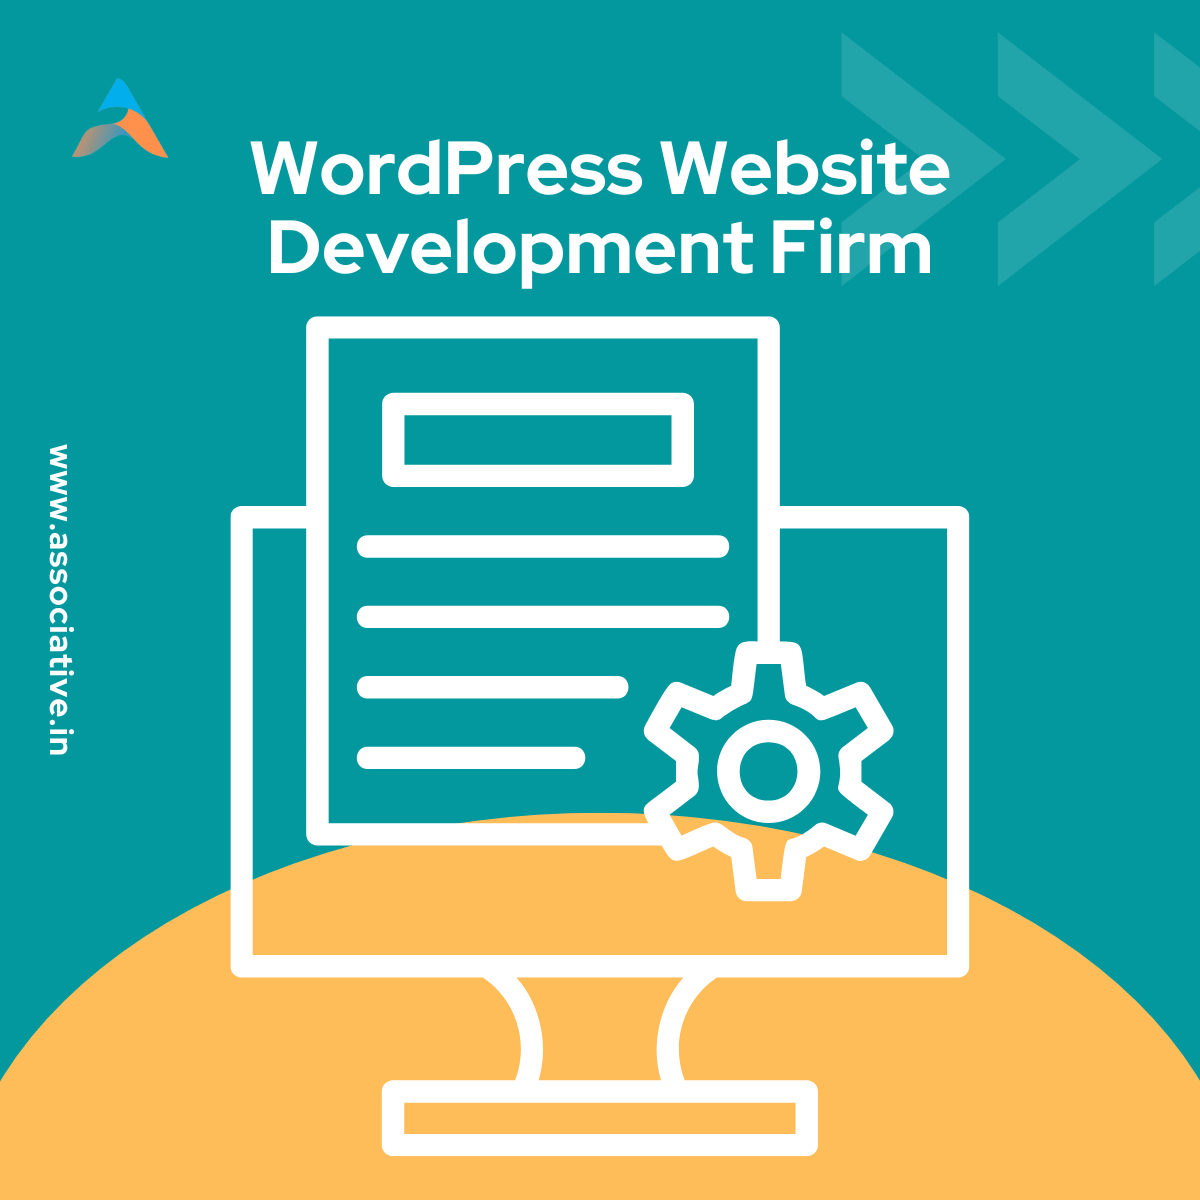 WordPress website development firm